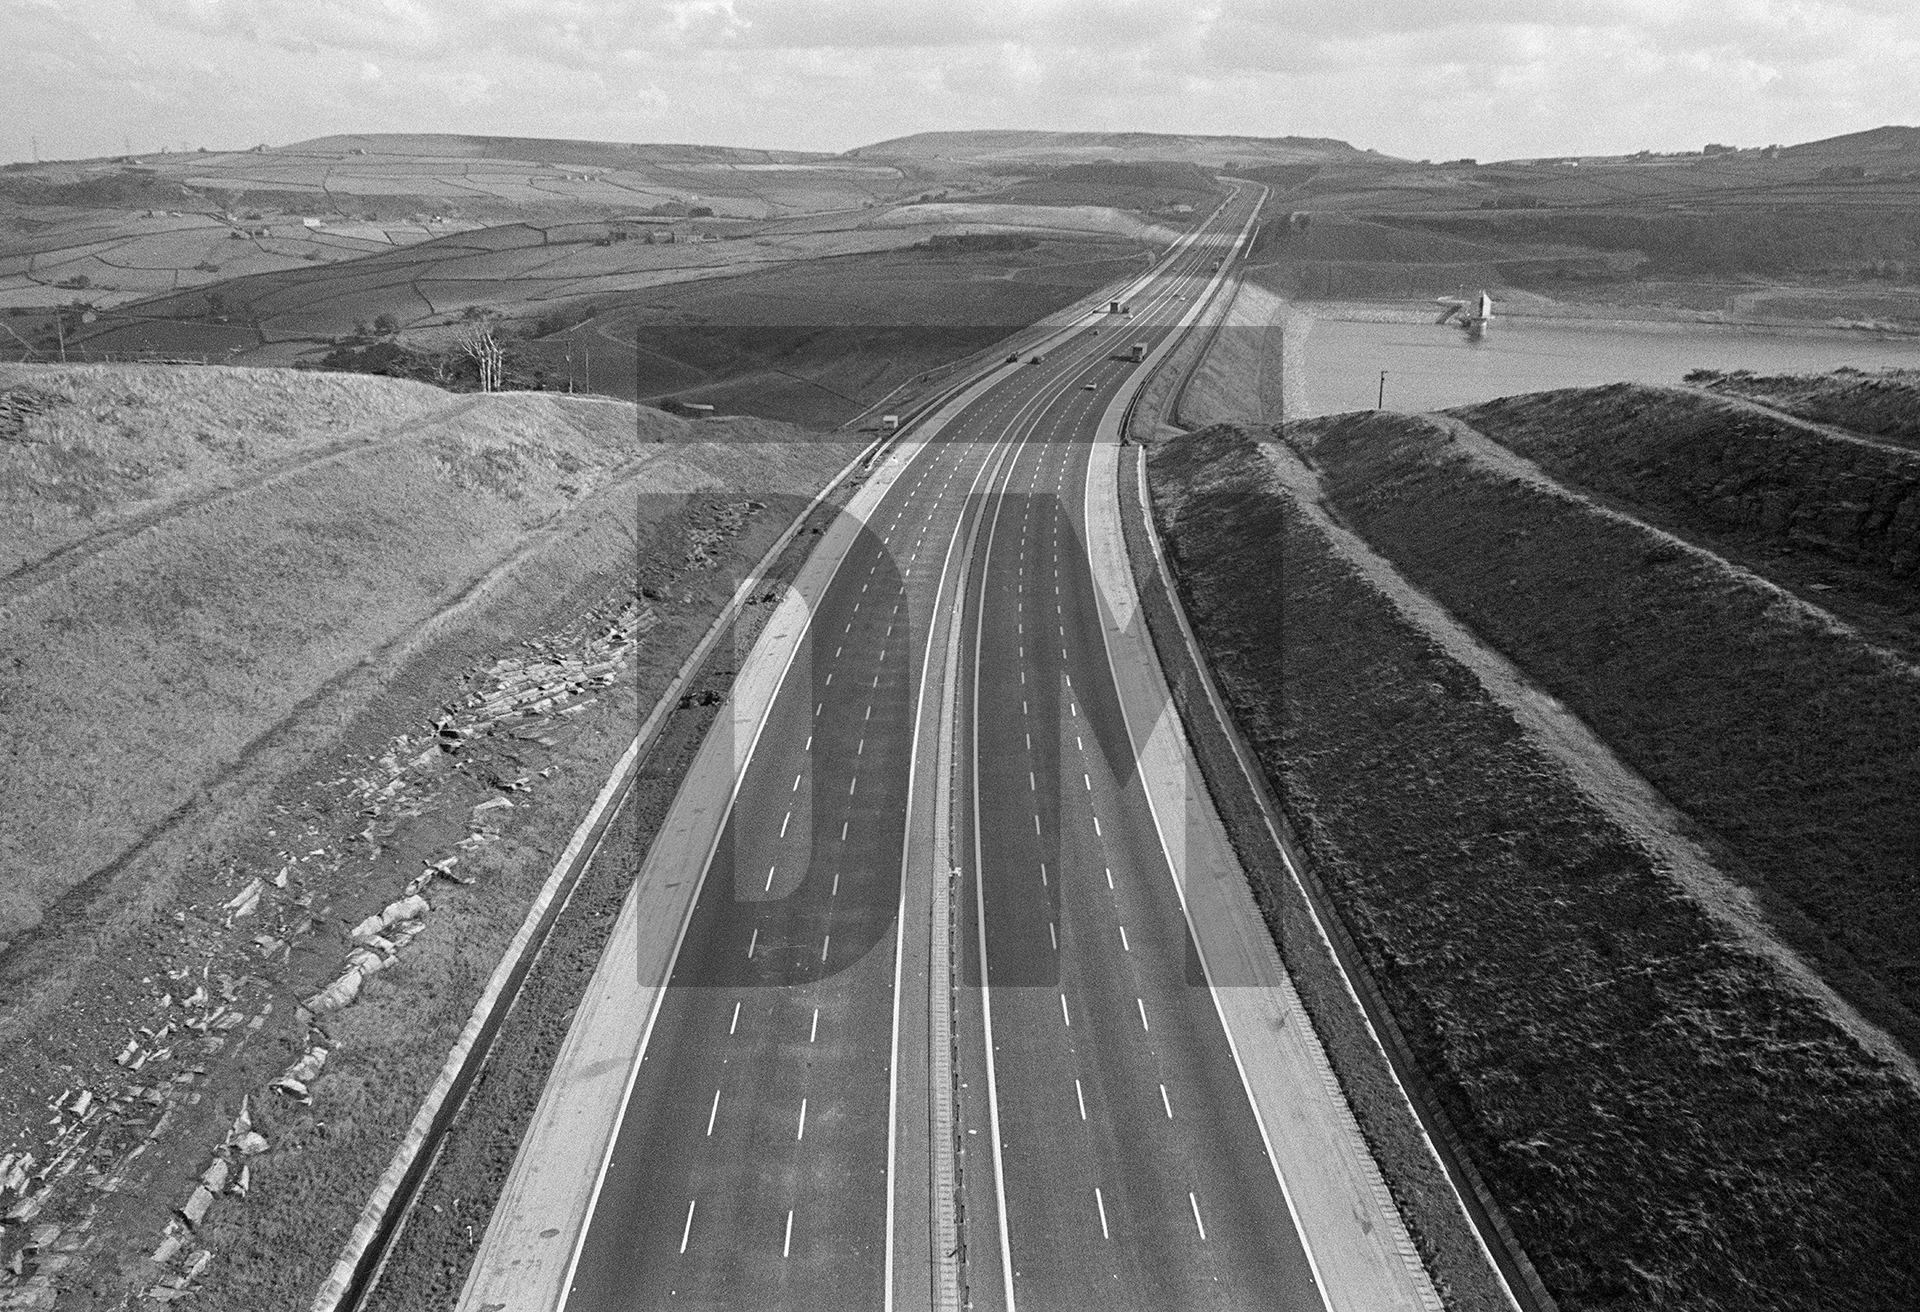 M62 motorway near Ripponden, Scammonden Reservoir to the right, West Yorkshire. October 1973 by Daniel Meadows